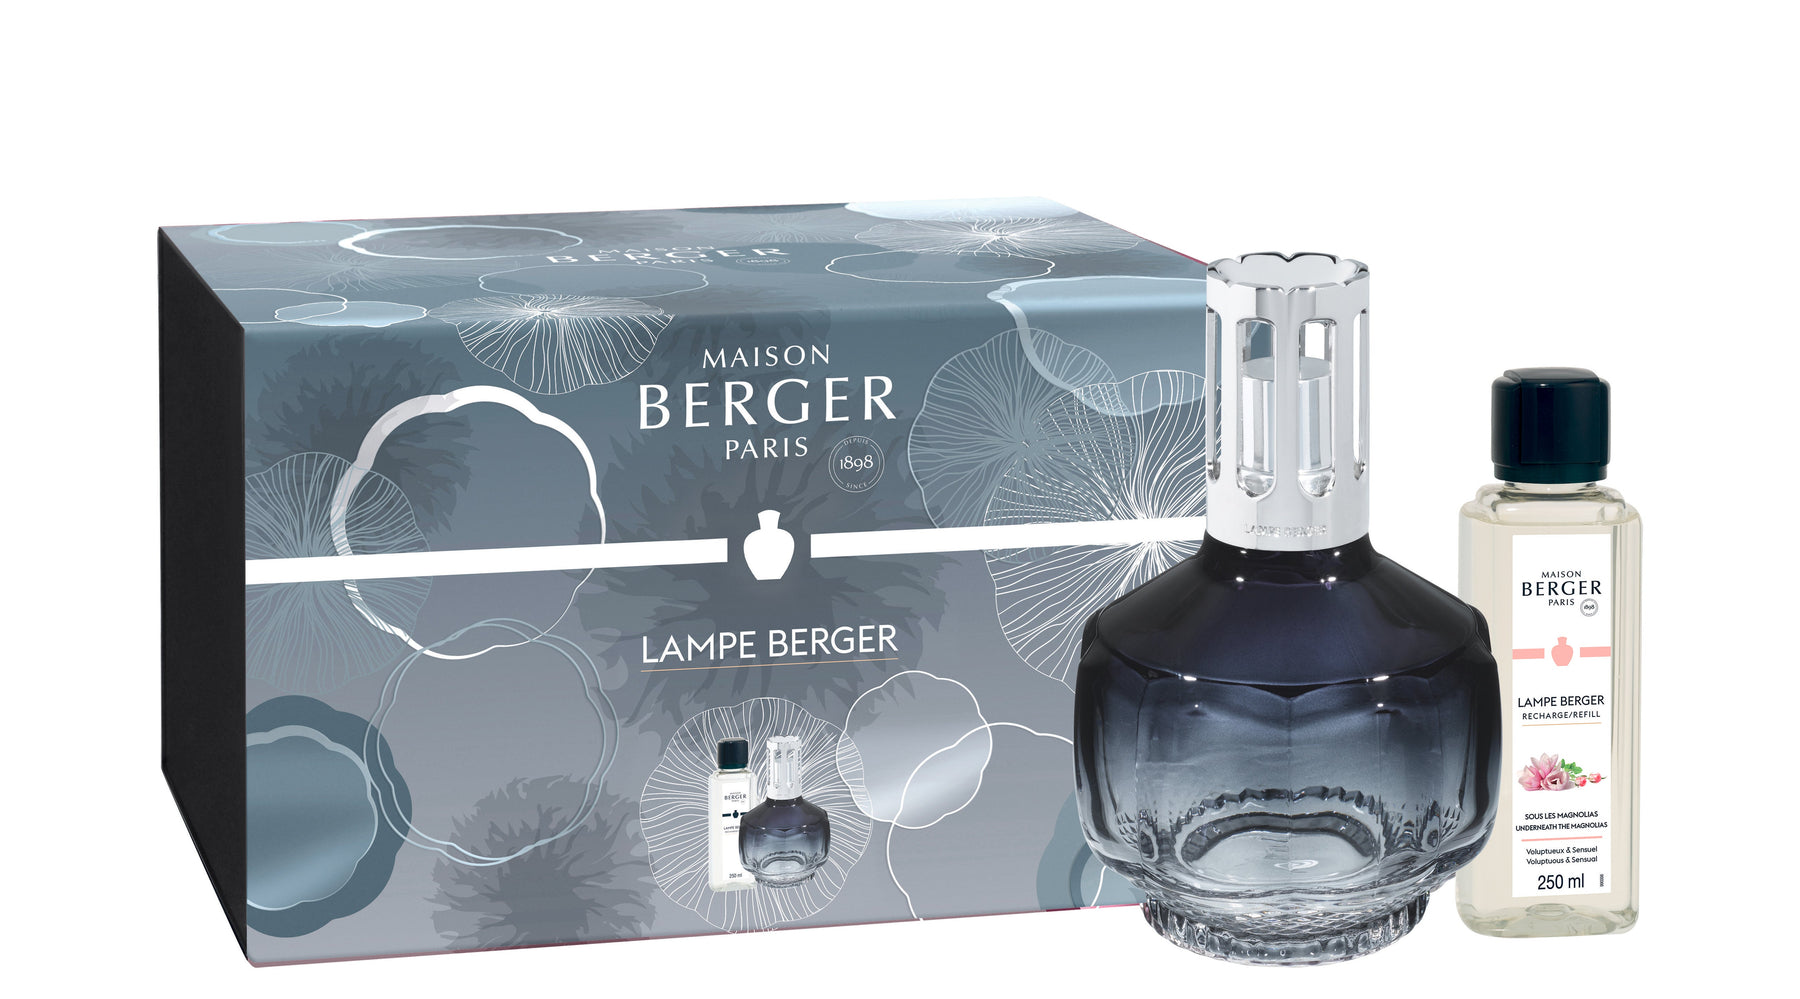 Lampe Berger Molecule Lamp Gift Set - Night Blue by Maison Berger